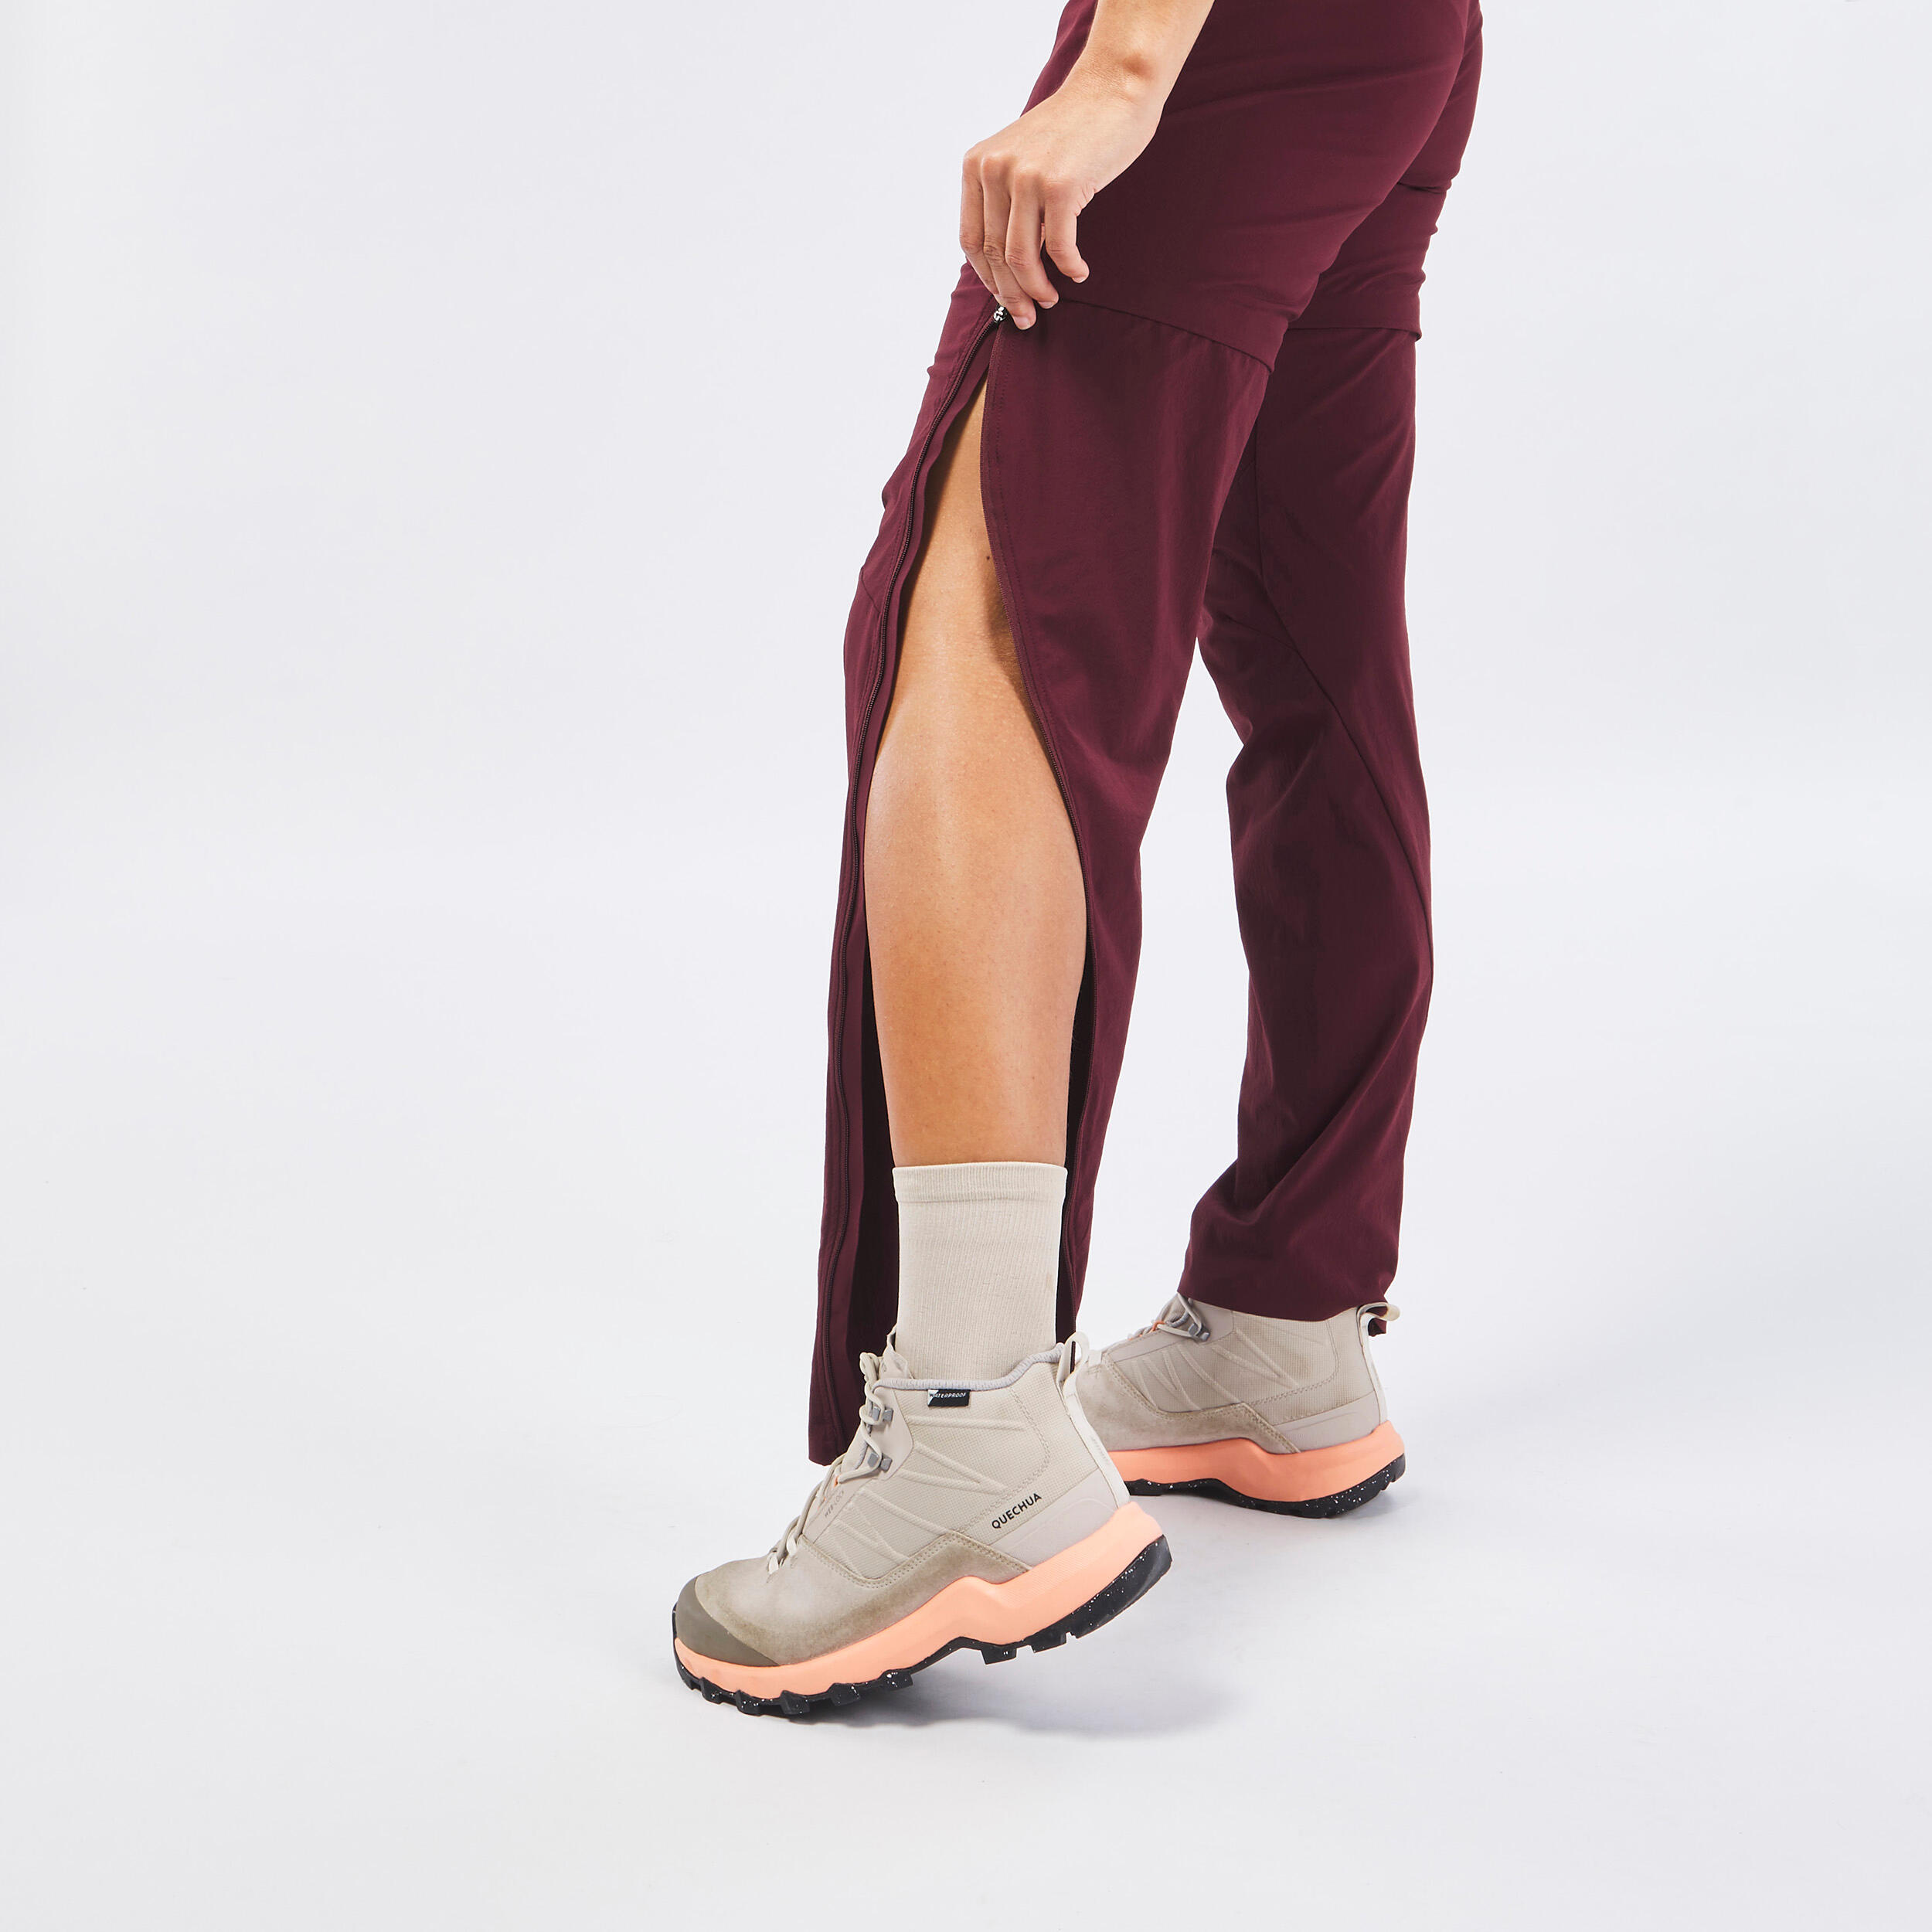 Women's Convertible Mountain Walking Trousers - MH550 - Bordeaux  13/15